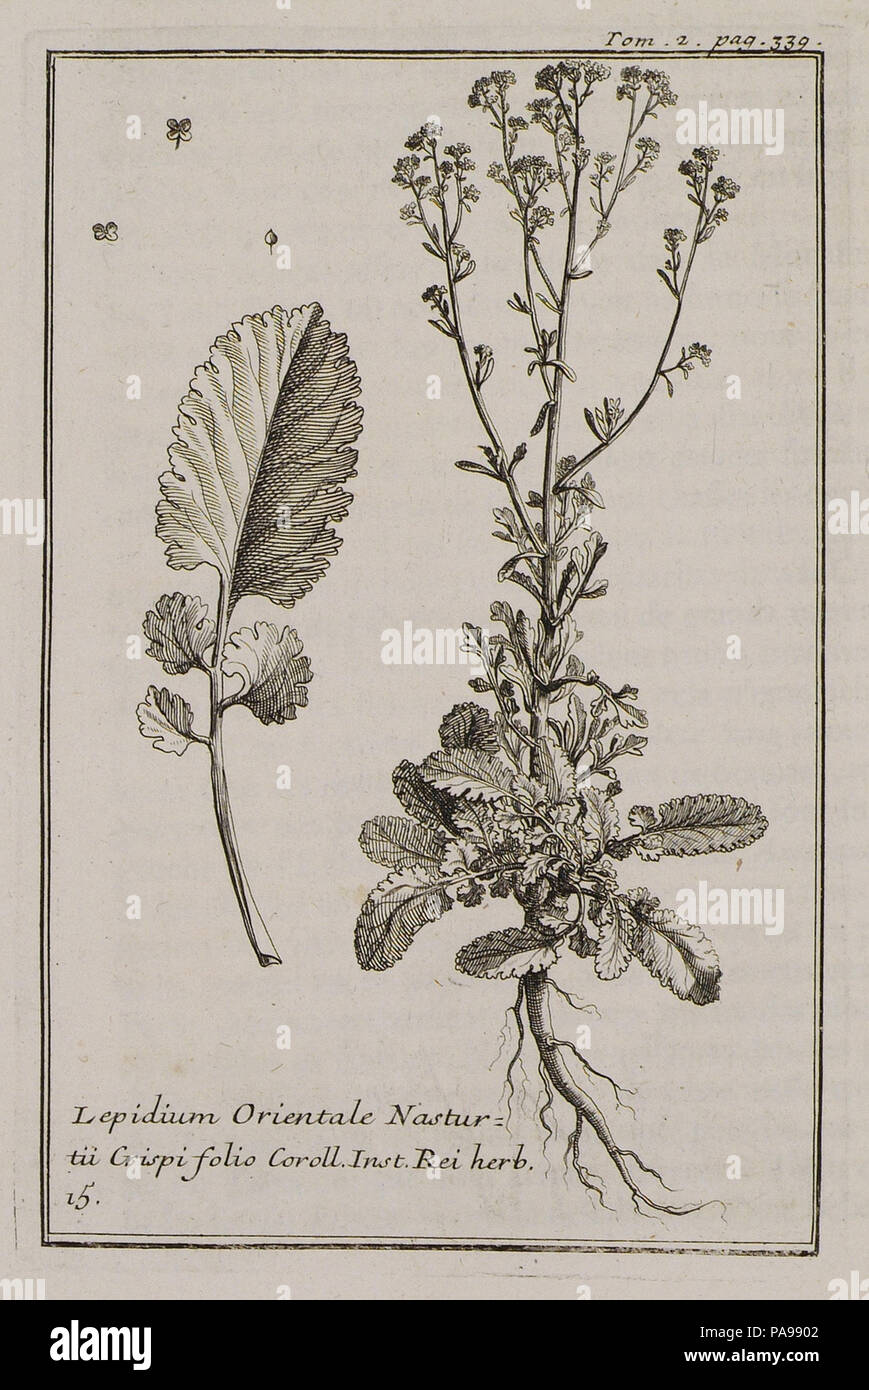 157 Lepidium Orientale Nasturtii Crispi folio Coroll Inst Rei herb 15 - Tournefort Joseph Pitton De - 1717 Stock Photo